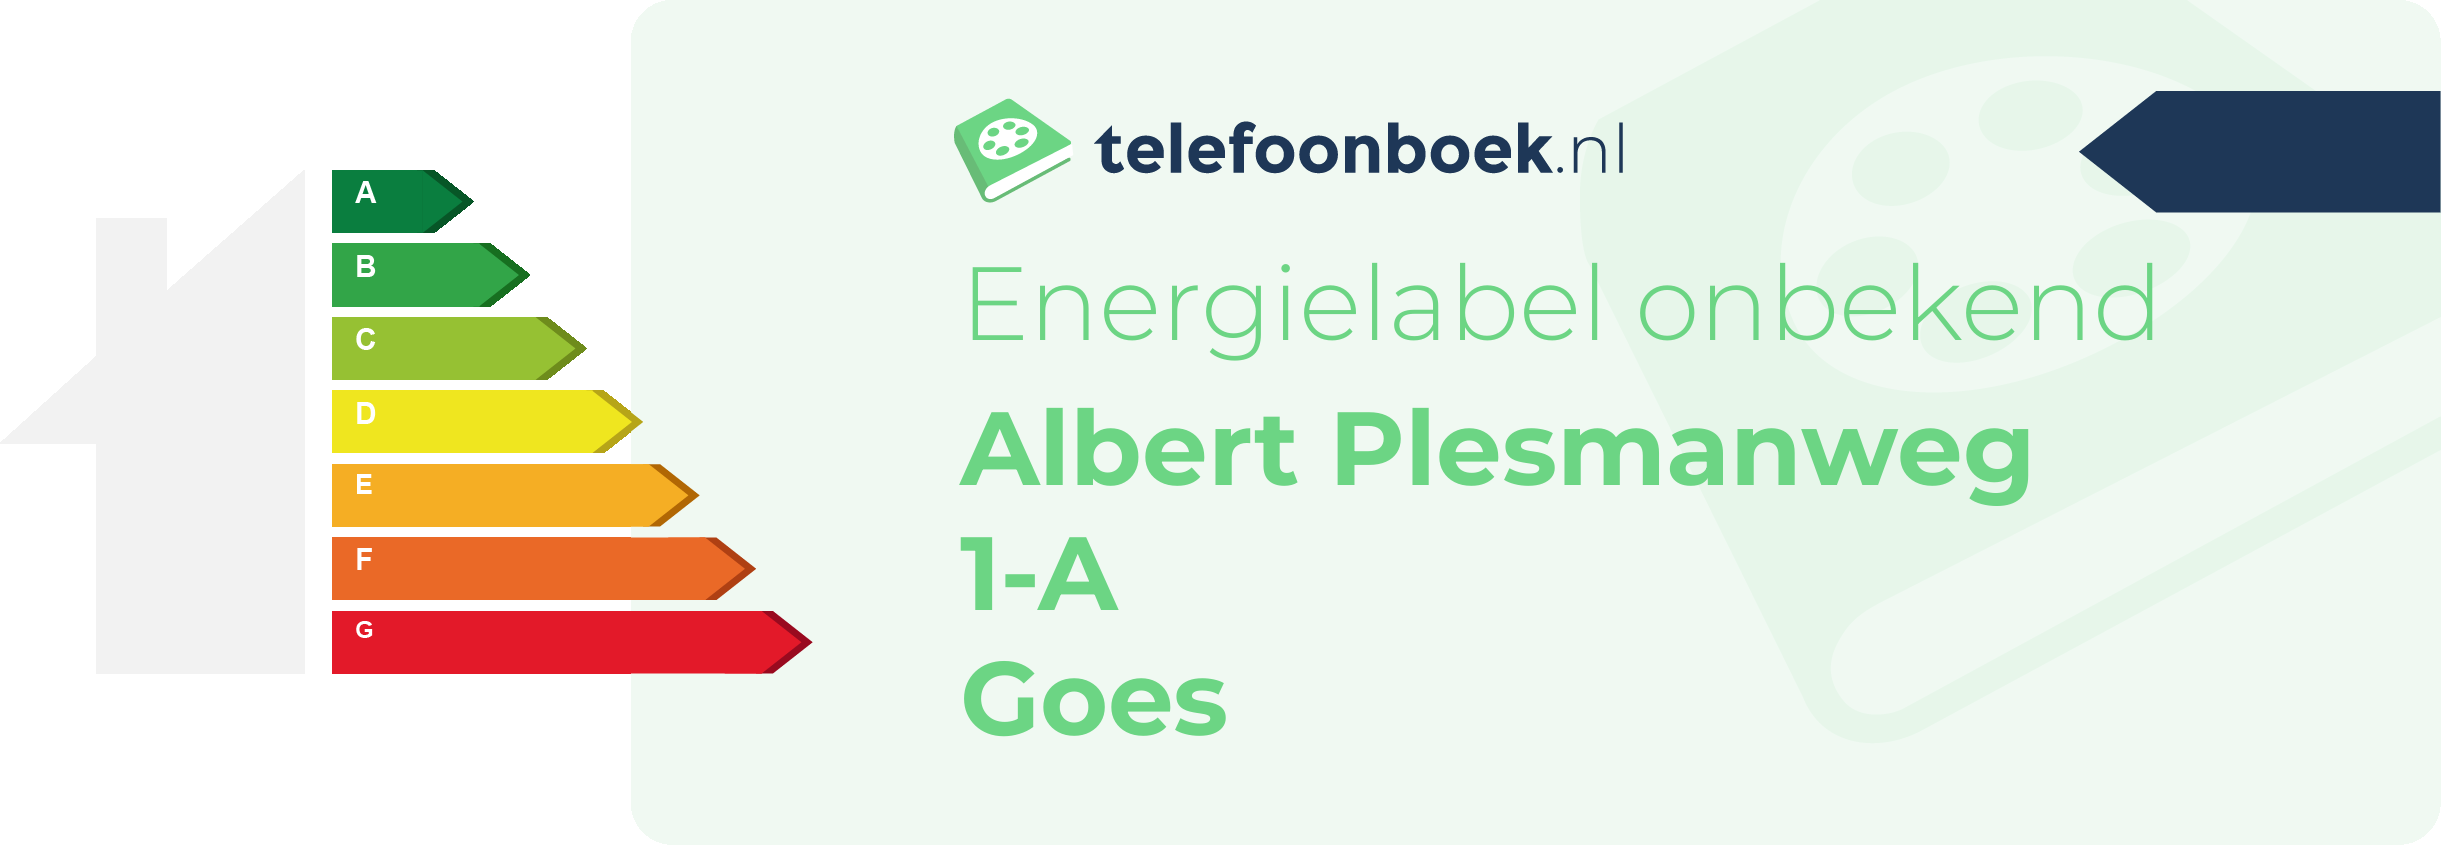 Energielabel Albert Plesmanweg 1-A Goes